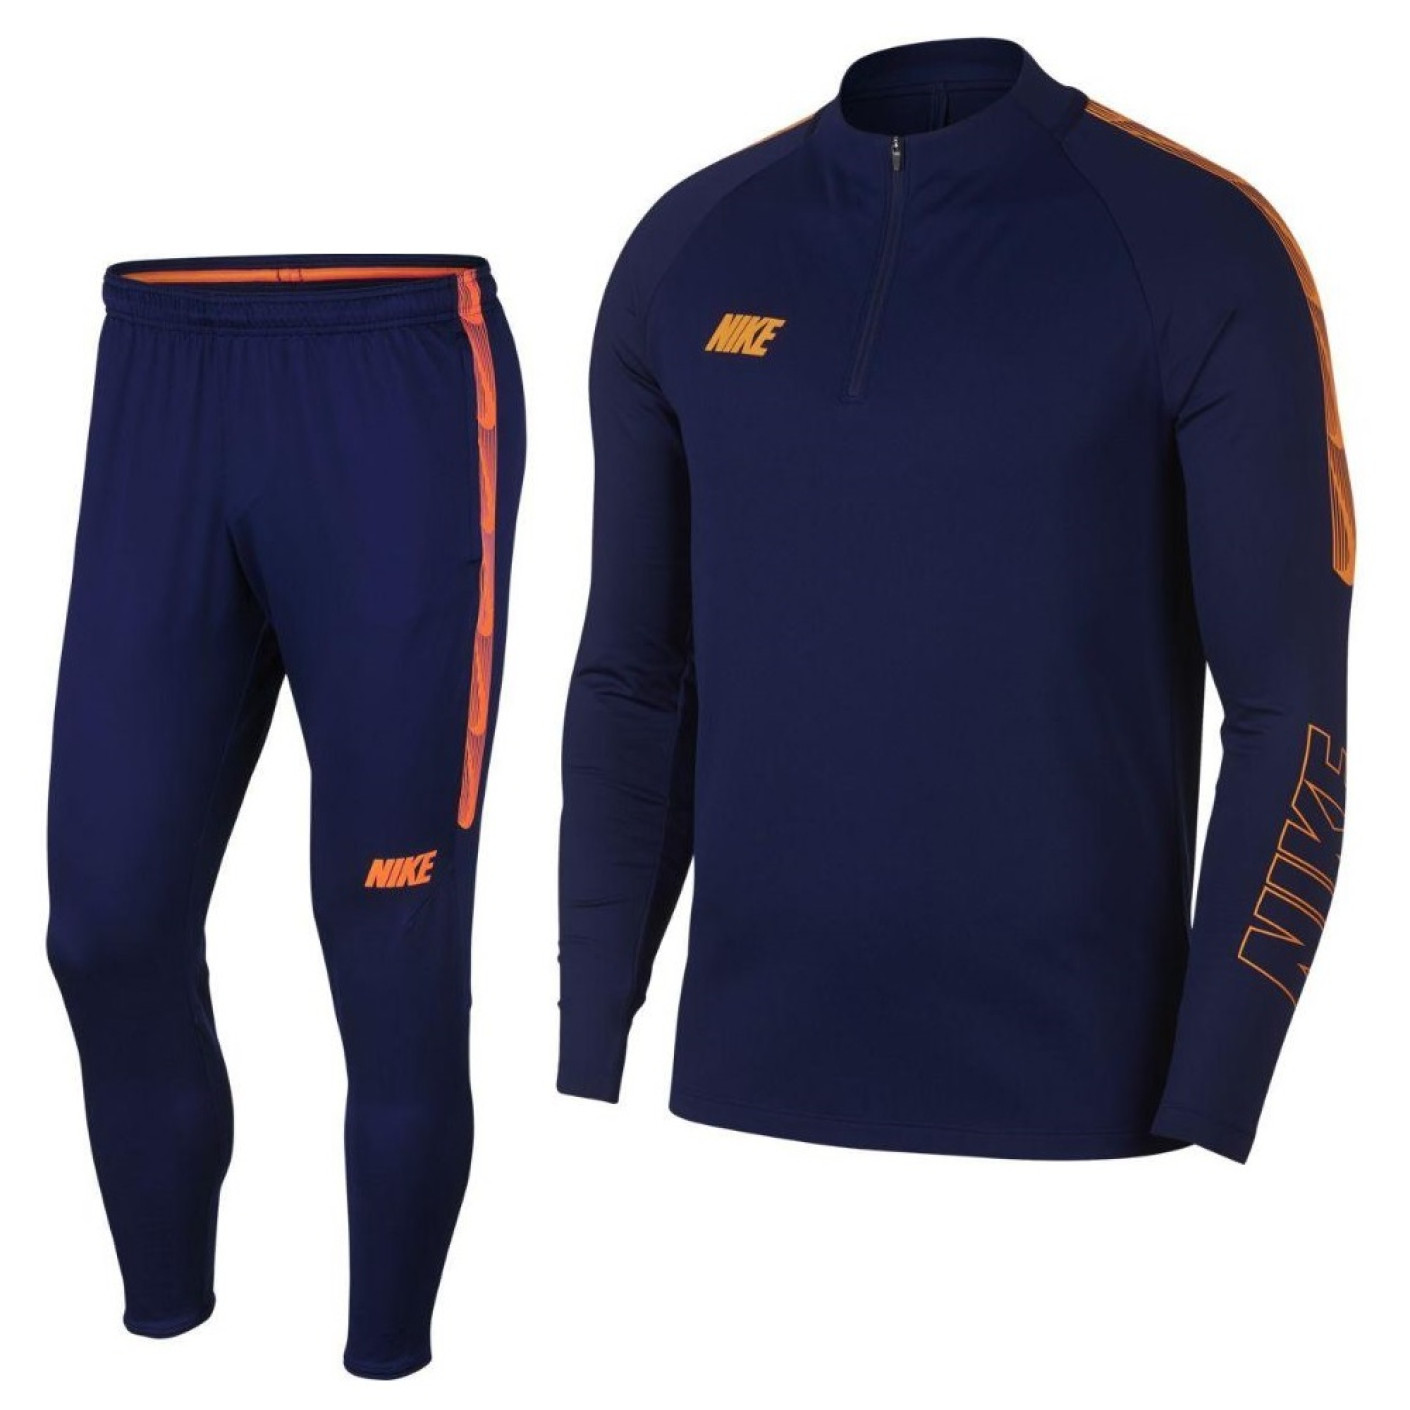 Nike Dry Squad Trainingspak Donkerblauw Oranje